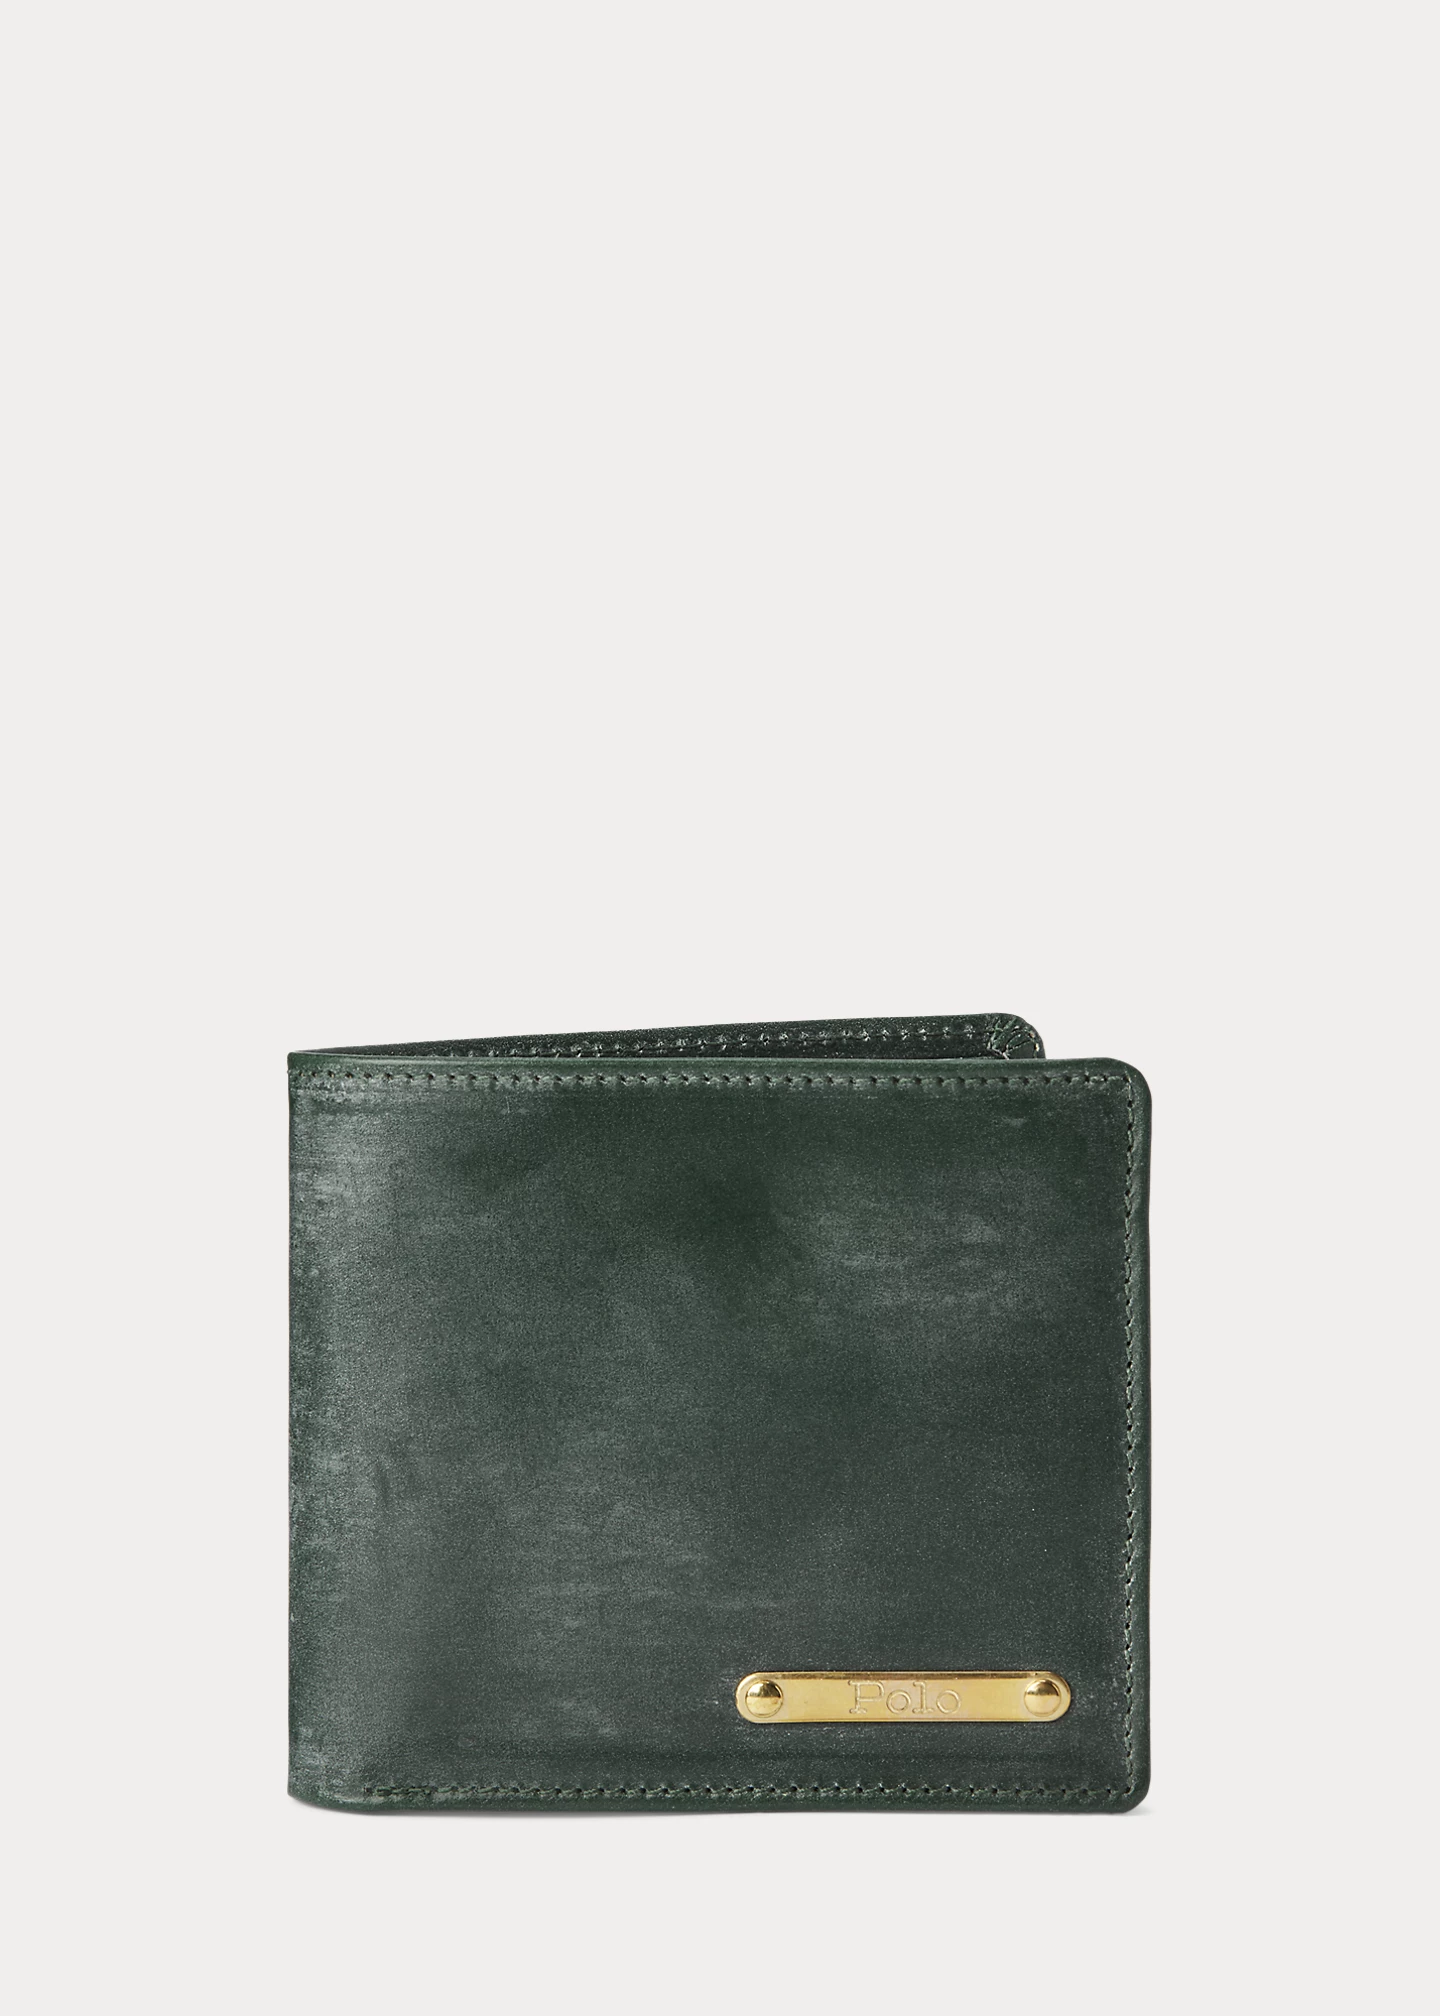 stylish handbags Wallets & Small Leather Goods